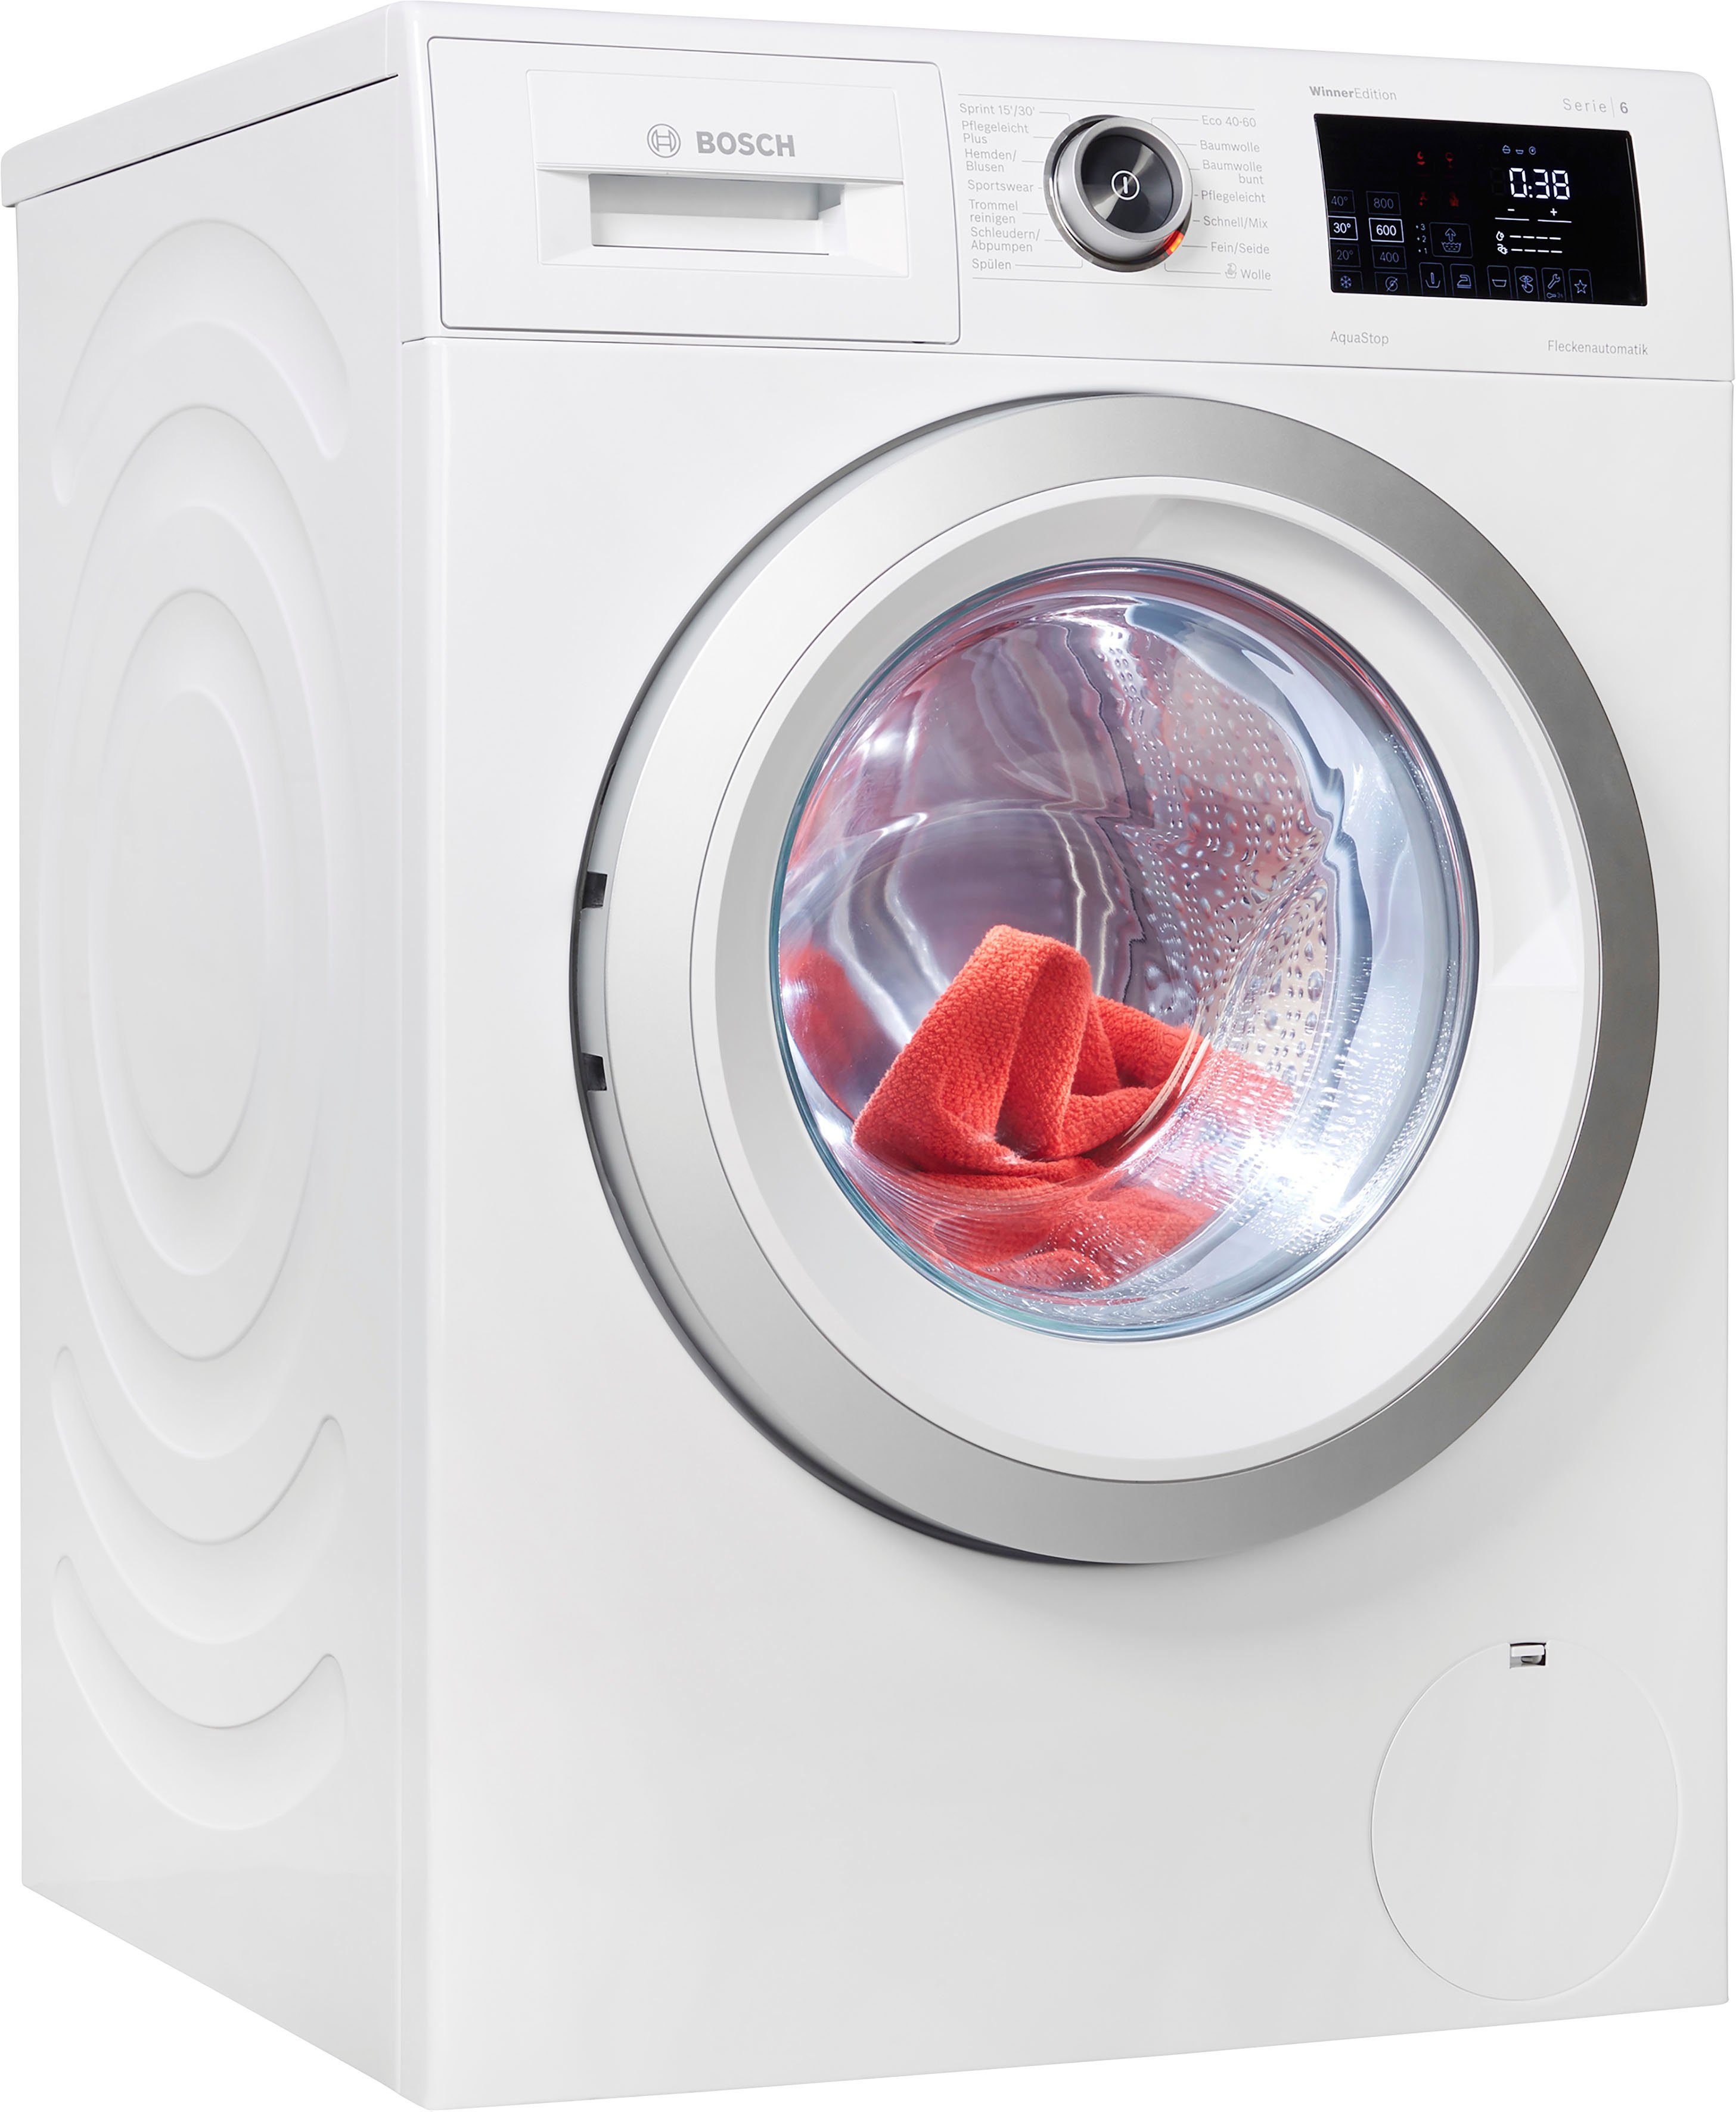 geizig BOSCH Waschmaschine 1400 WAU28RWIN, U/min 9 kg